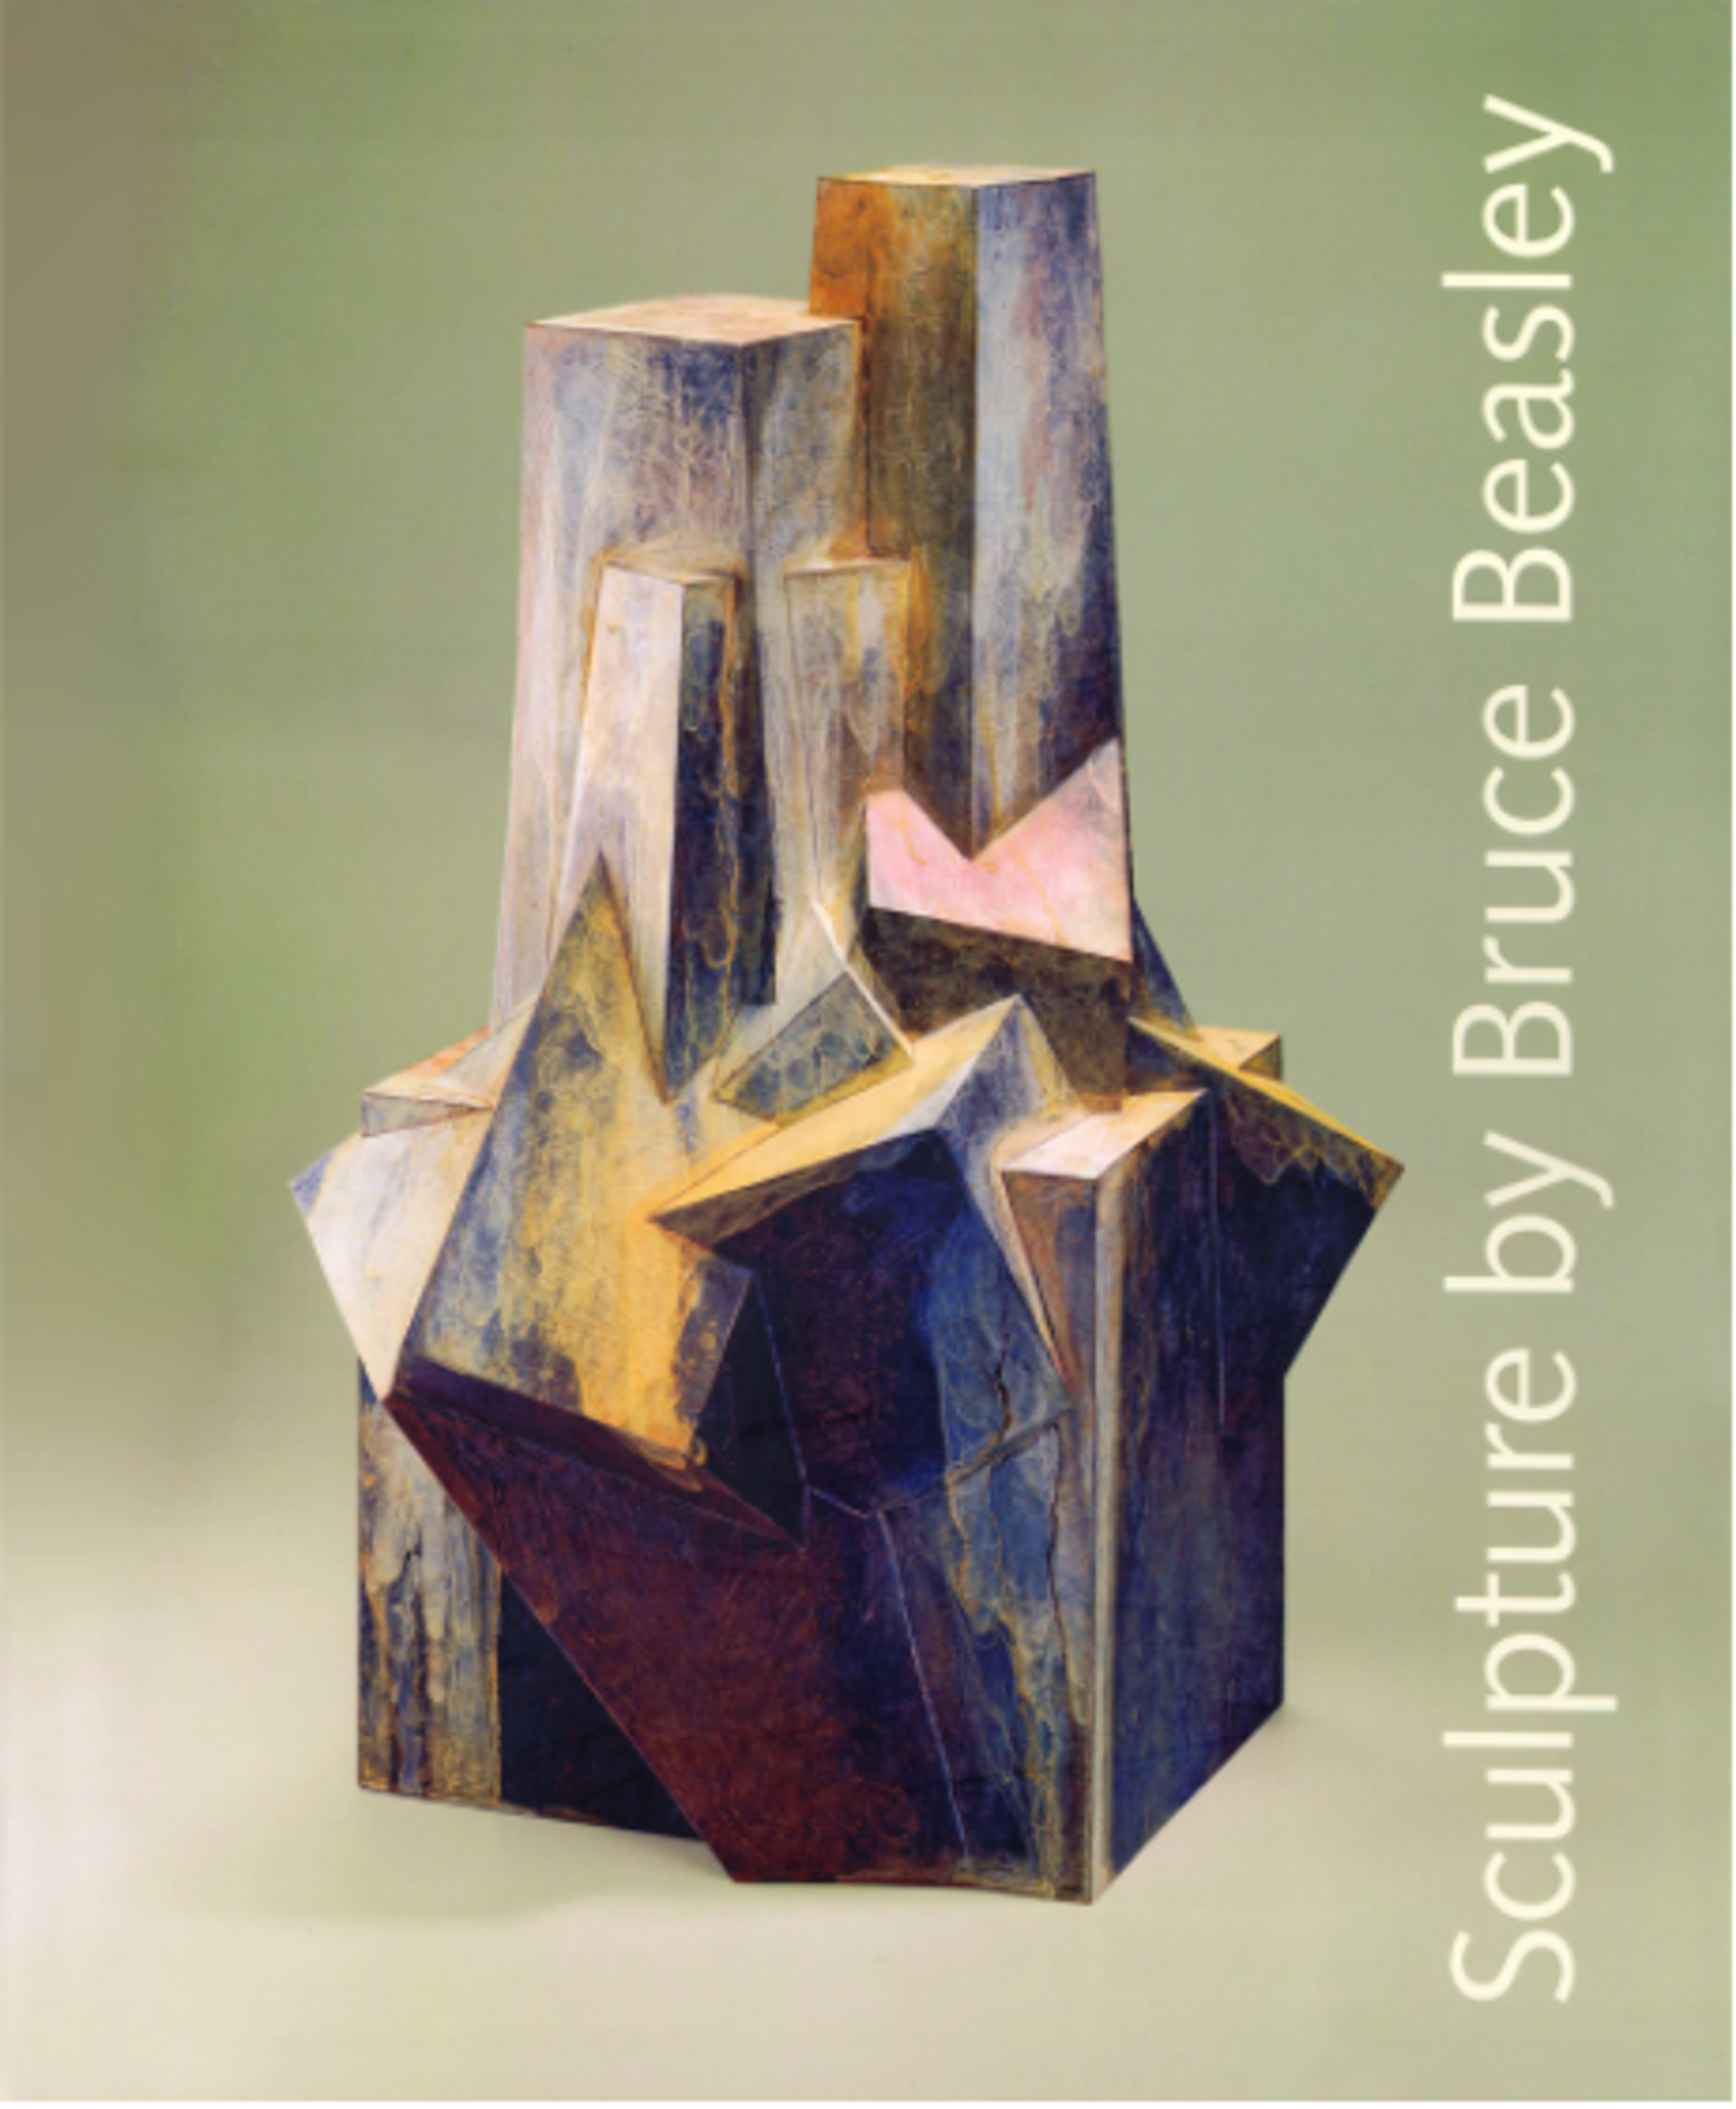 Bruce Beasley: Sculpture by Bruce Beasley